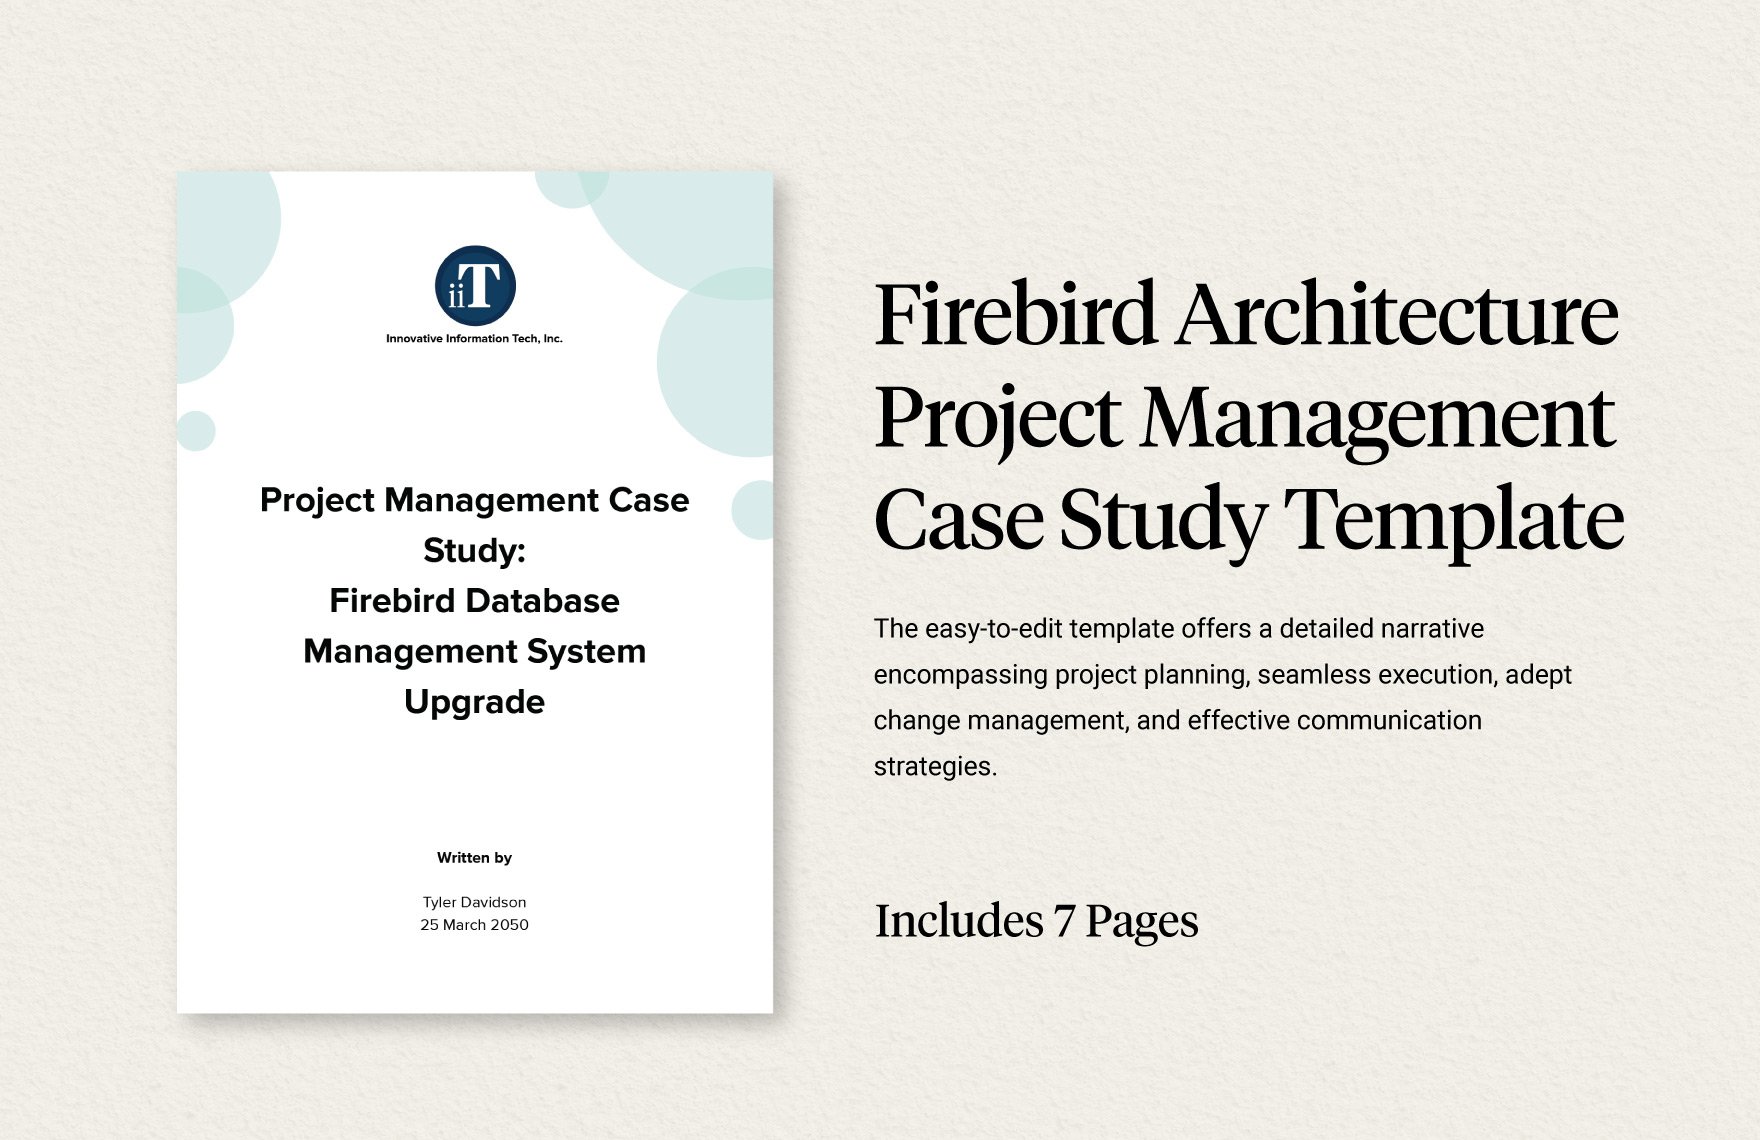 Firebird Architecture Project Management Case Study Template